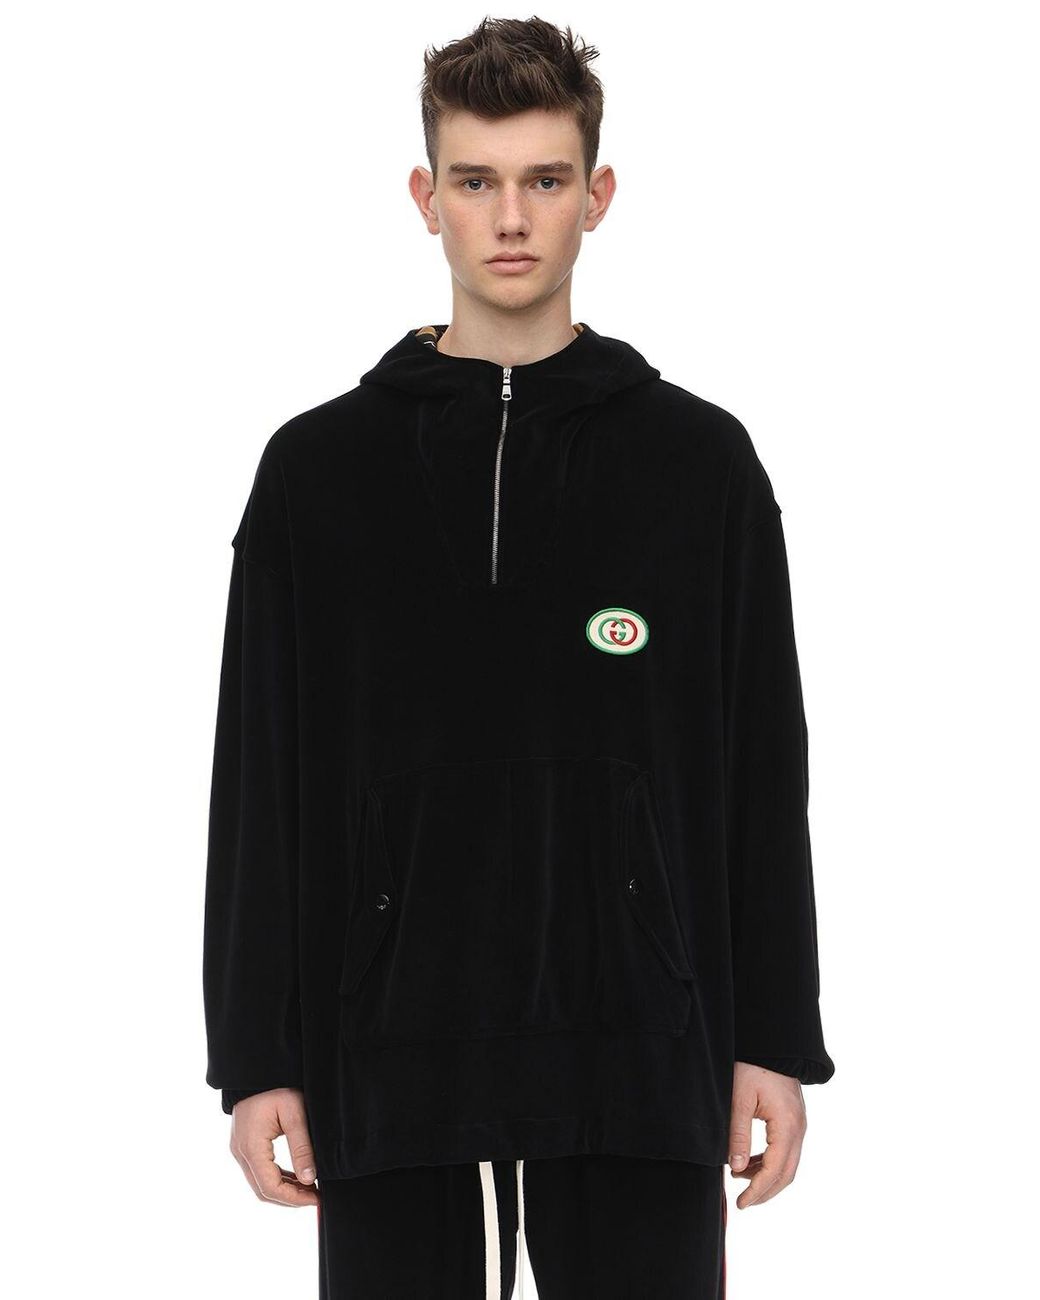 Gucci Zip-up Cotton Chenille Sweatshirt Hoodie in Black for Men - Lyst